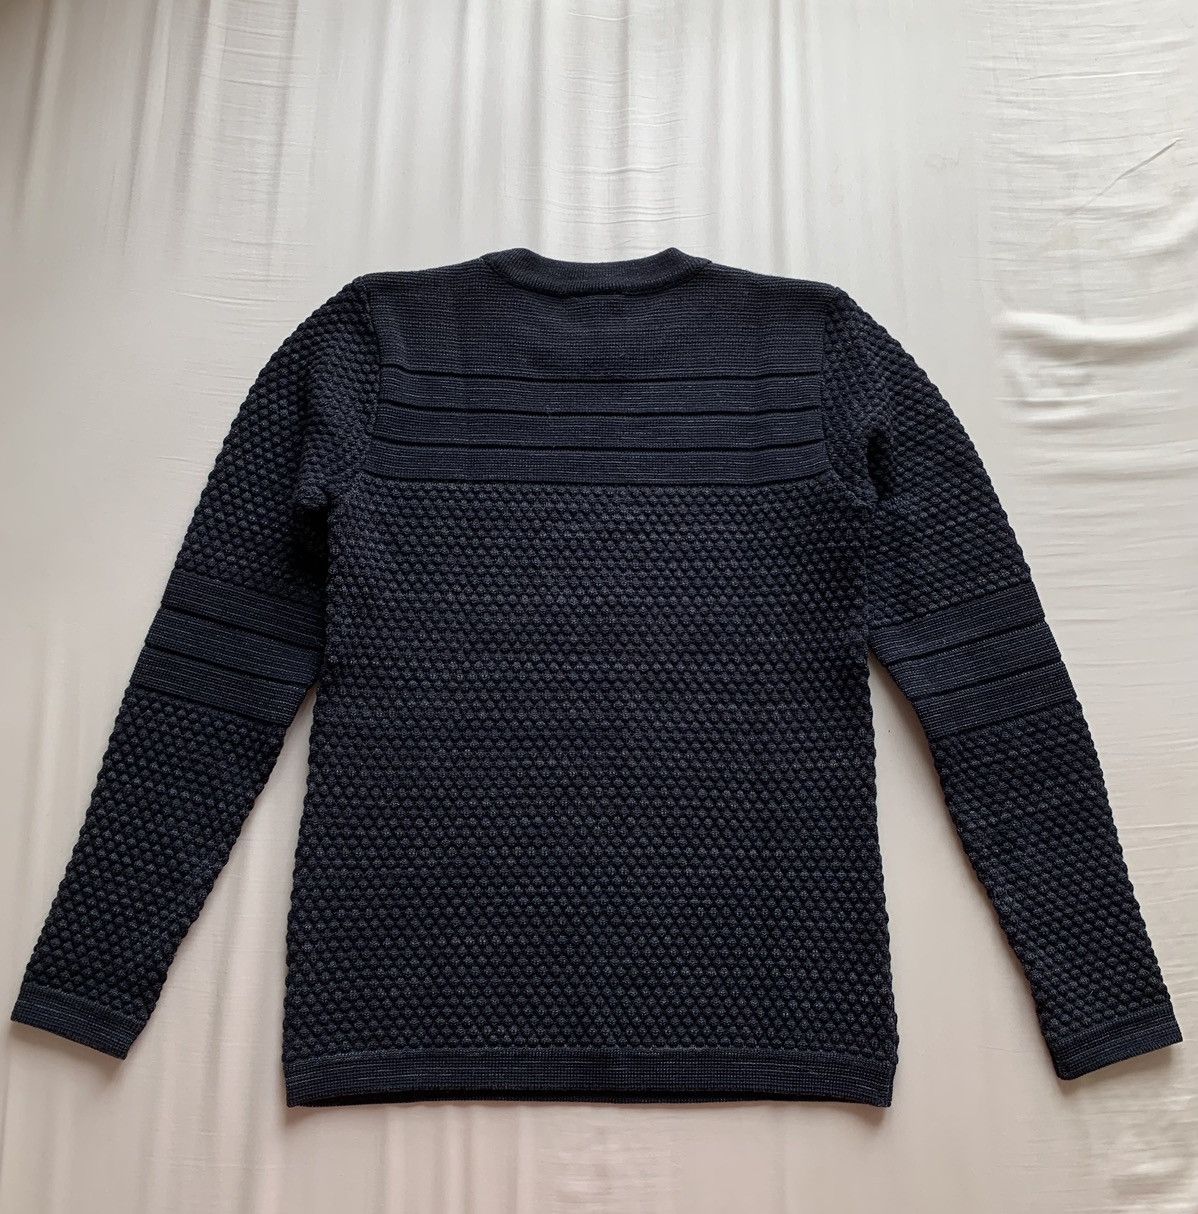 S.N.S. Herning S.N.S. HERNING Textured Virgin Wool Sweater midnight blue M Size US M / EU 48-50 / 2 - 3 Thumbnail